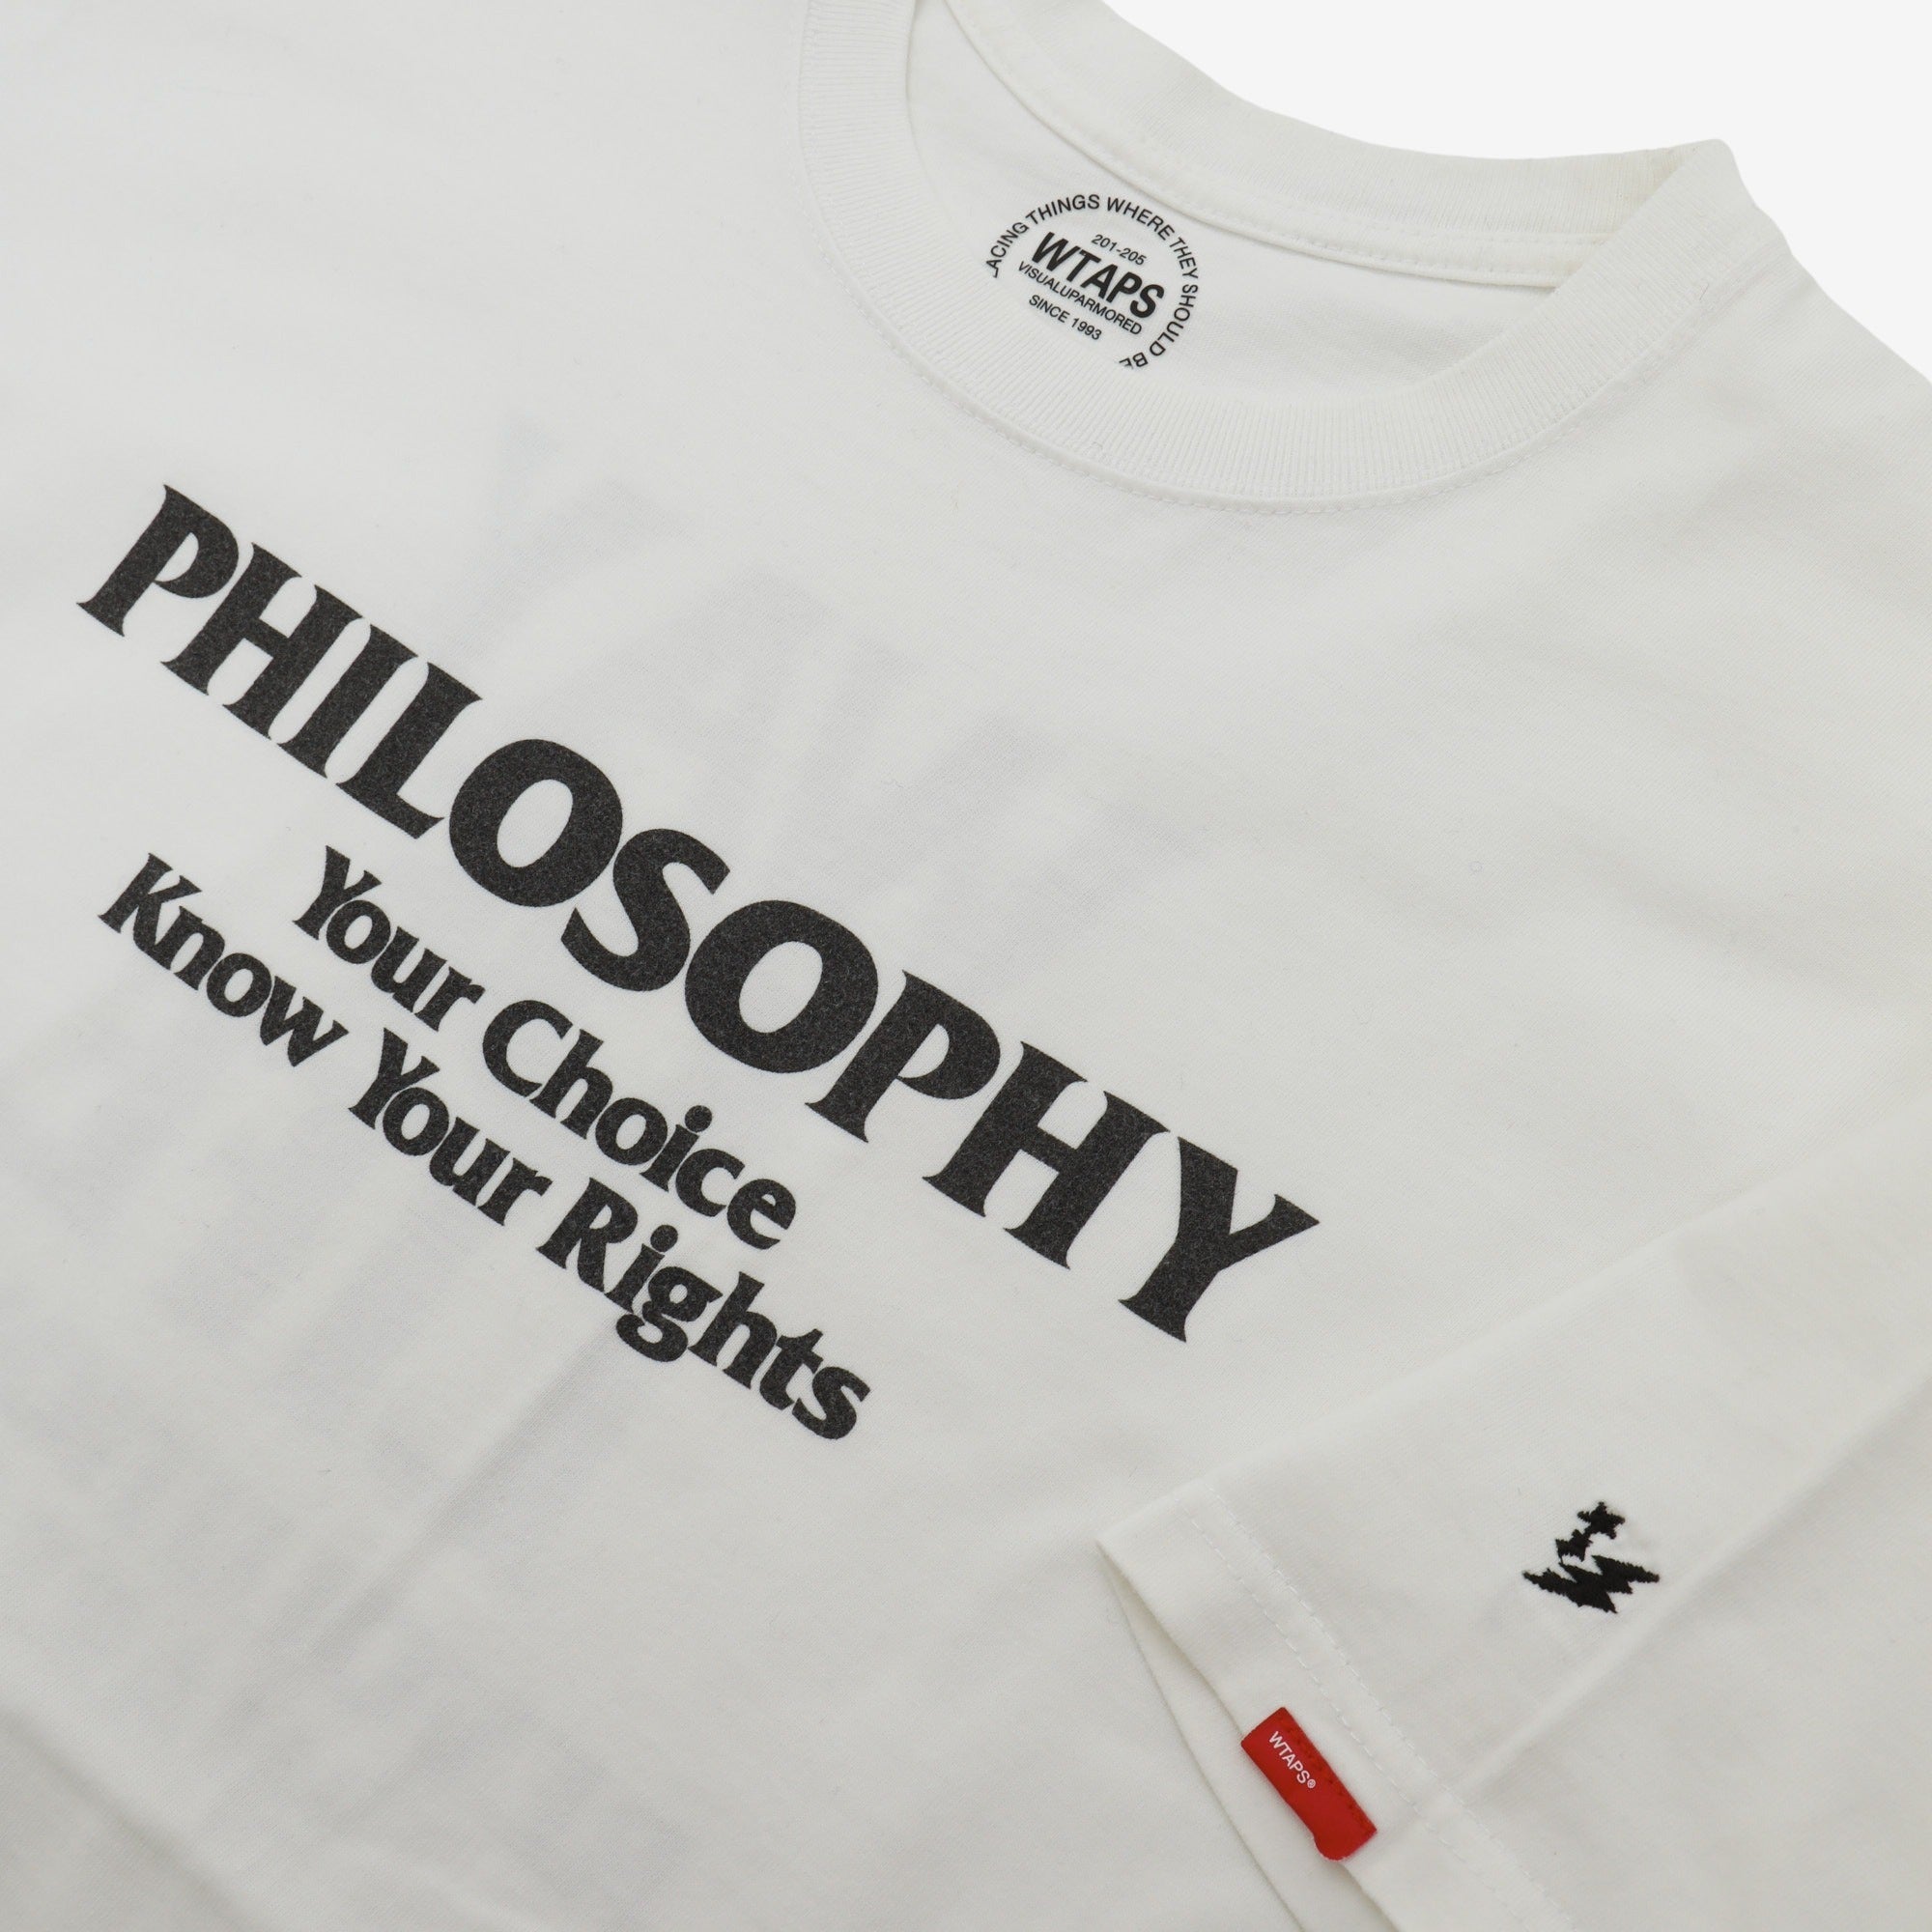 Philosophy T-shirt